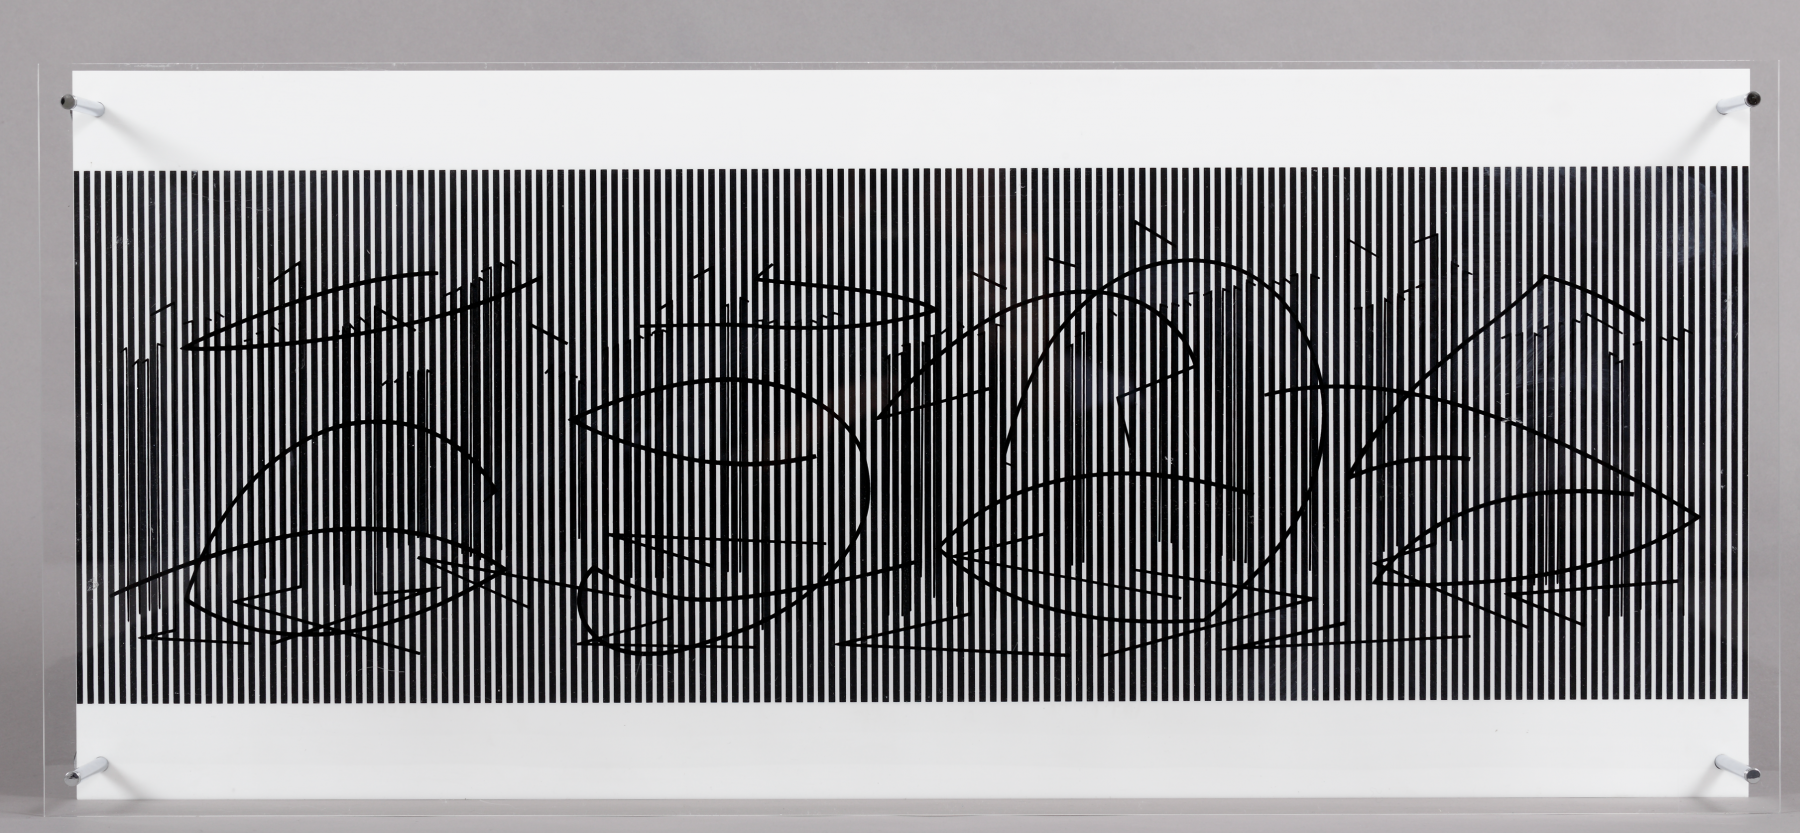 Jes&amp;uacute;s Rafael Soto

Escritura (S&amp;eacute;rie SINTESIS), 1978

Plexiglass&amp;nbsp;and metallic bars

30h x 70w x 8d cm
11 103/127h x 27 71/127w x 3 19/127d in

Edition 62/110